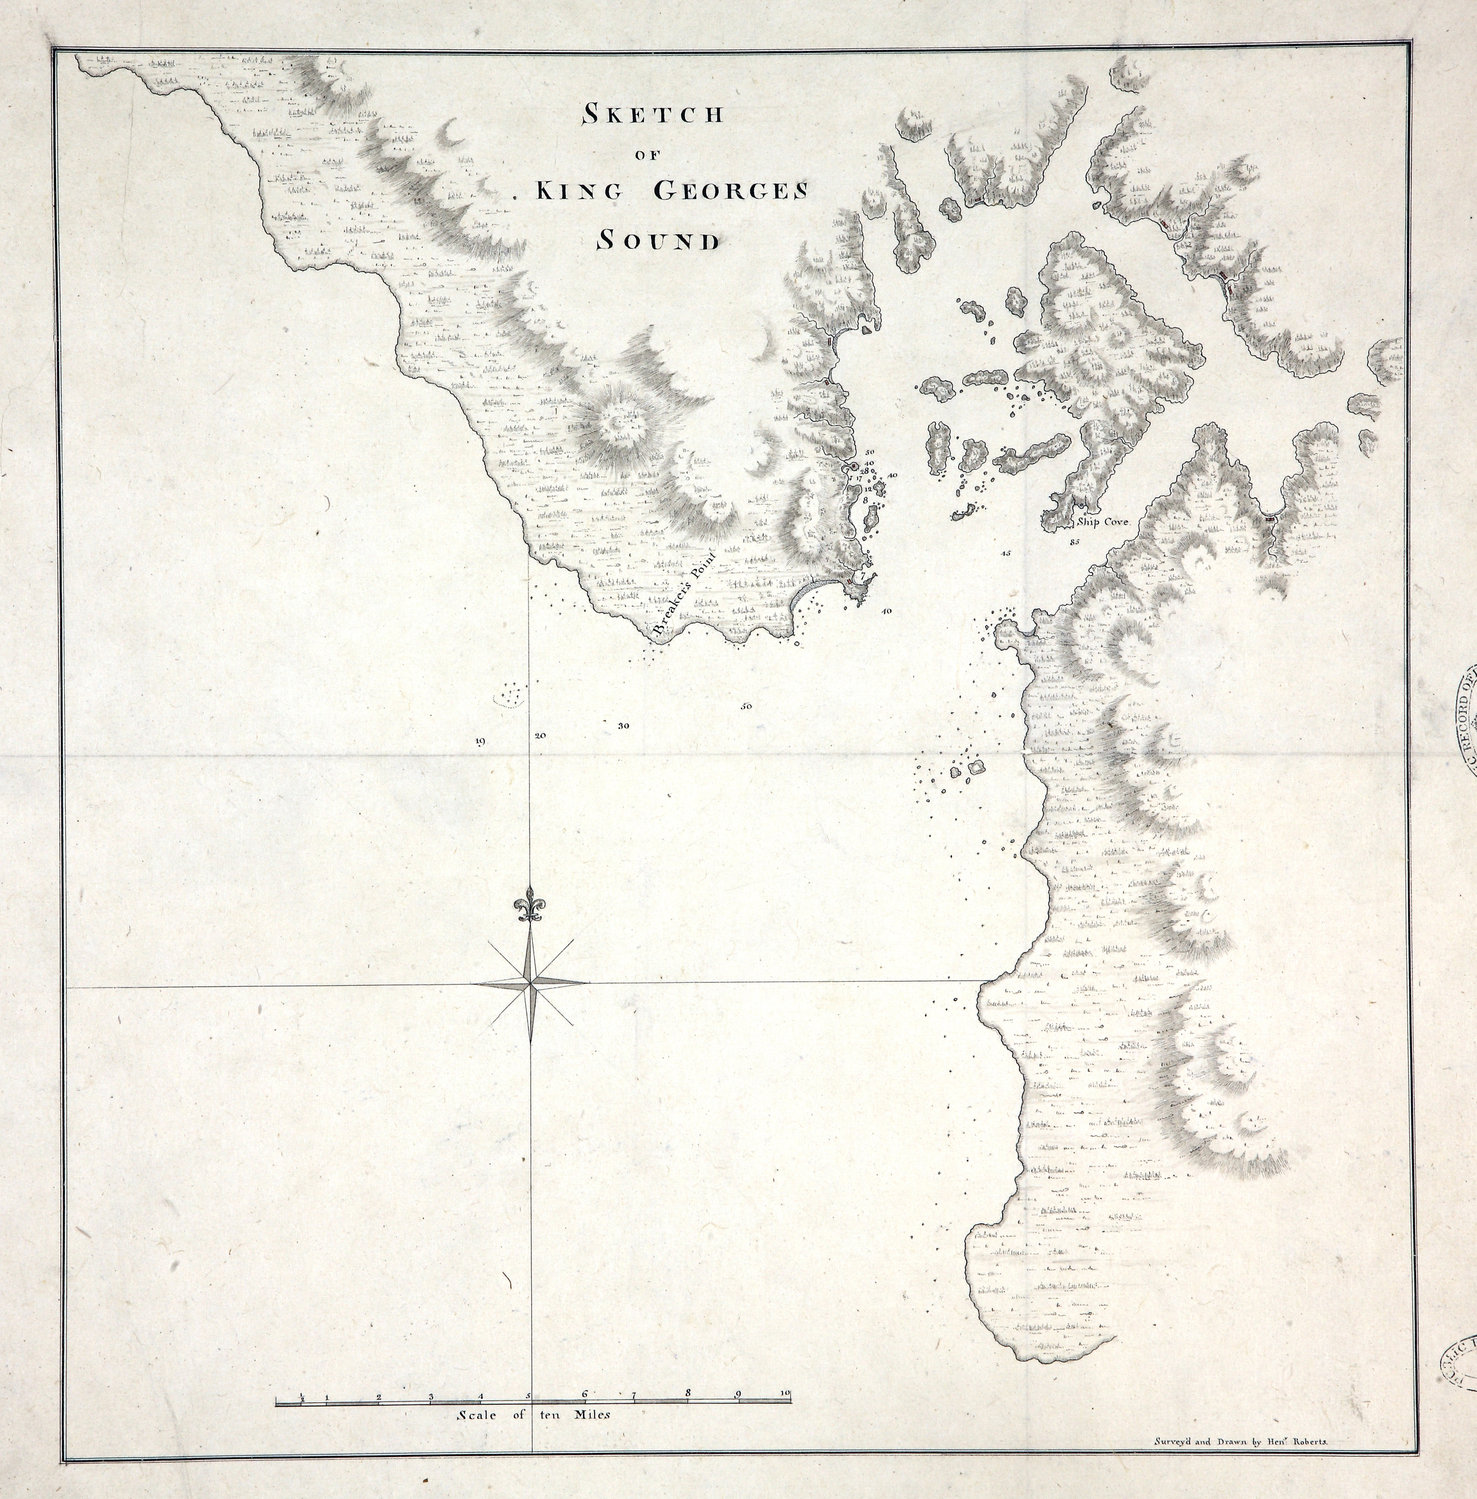 Sketch of King George's Sound (now Nootka Sound).